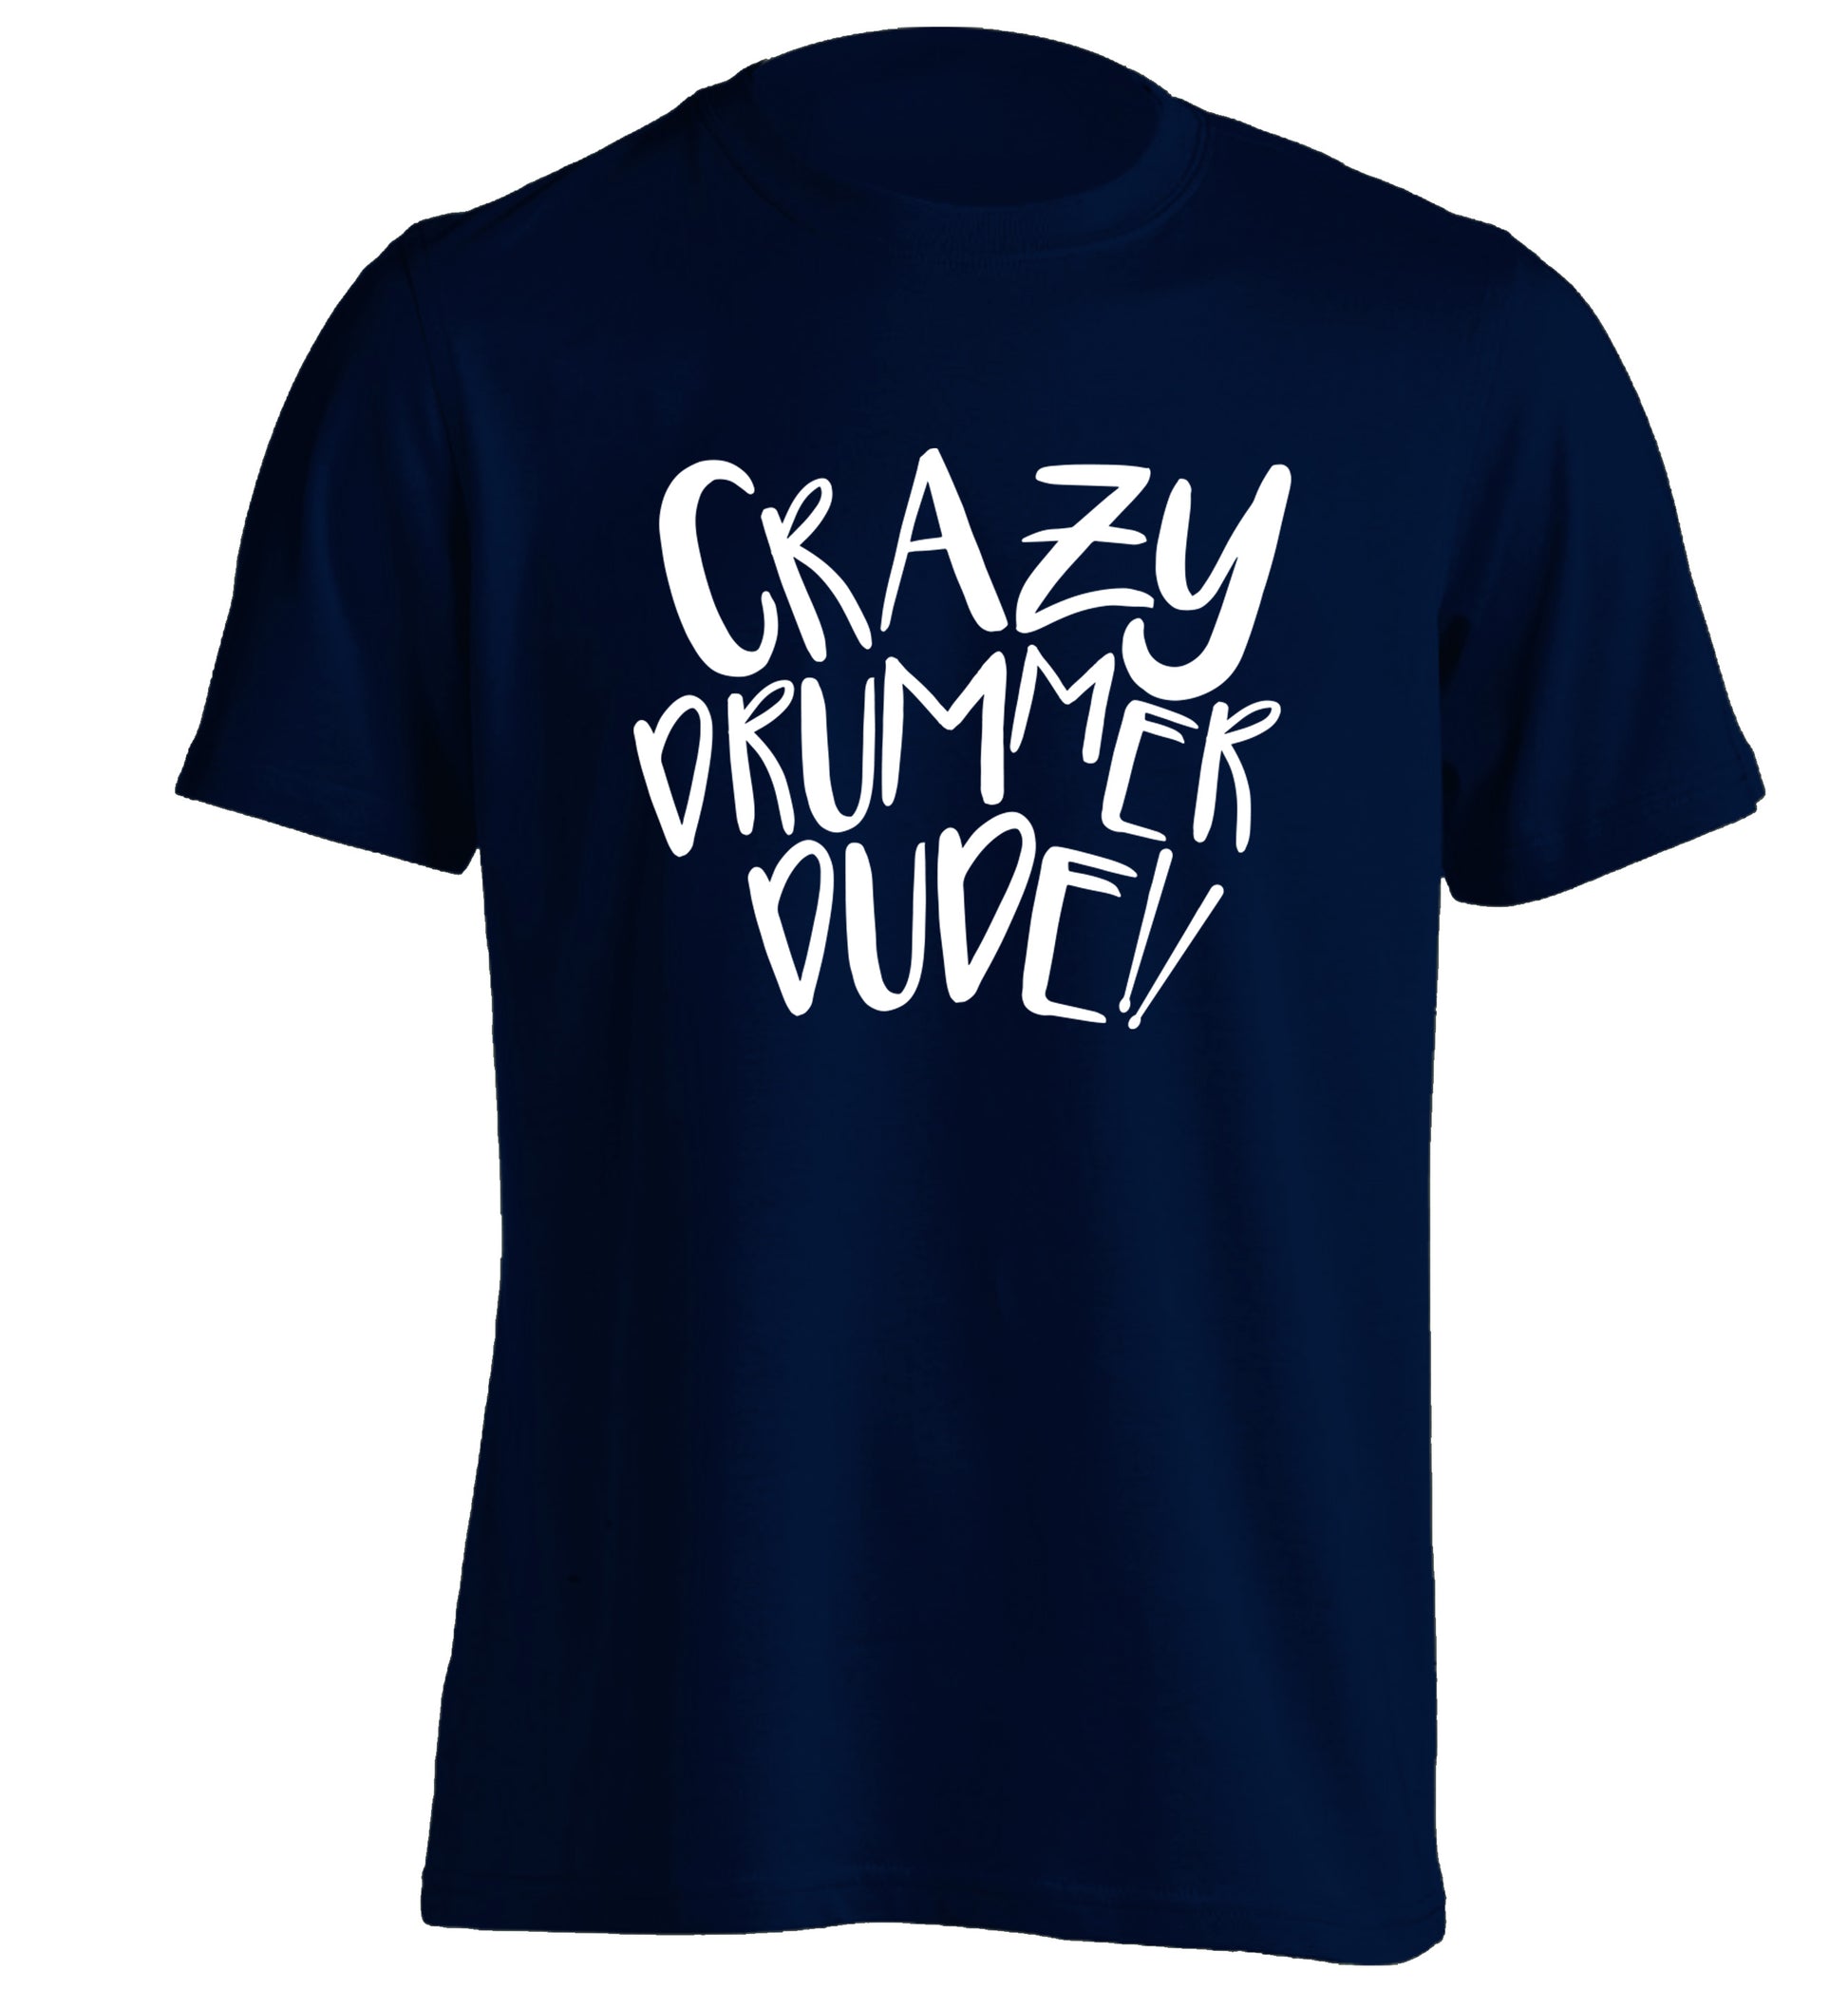 Crazy drummer dude adults unisex navy Tshirt 2XL